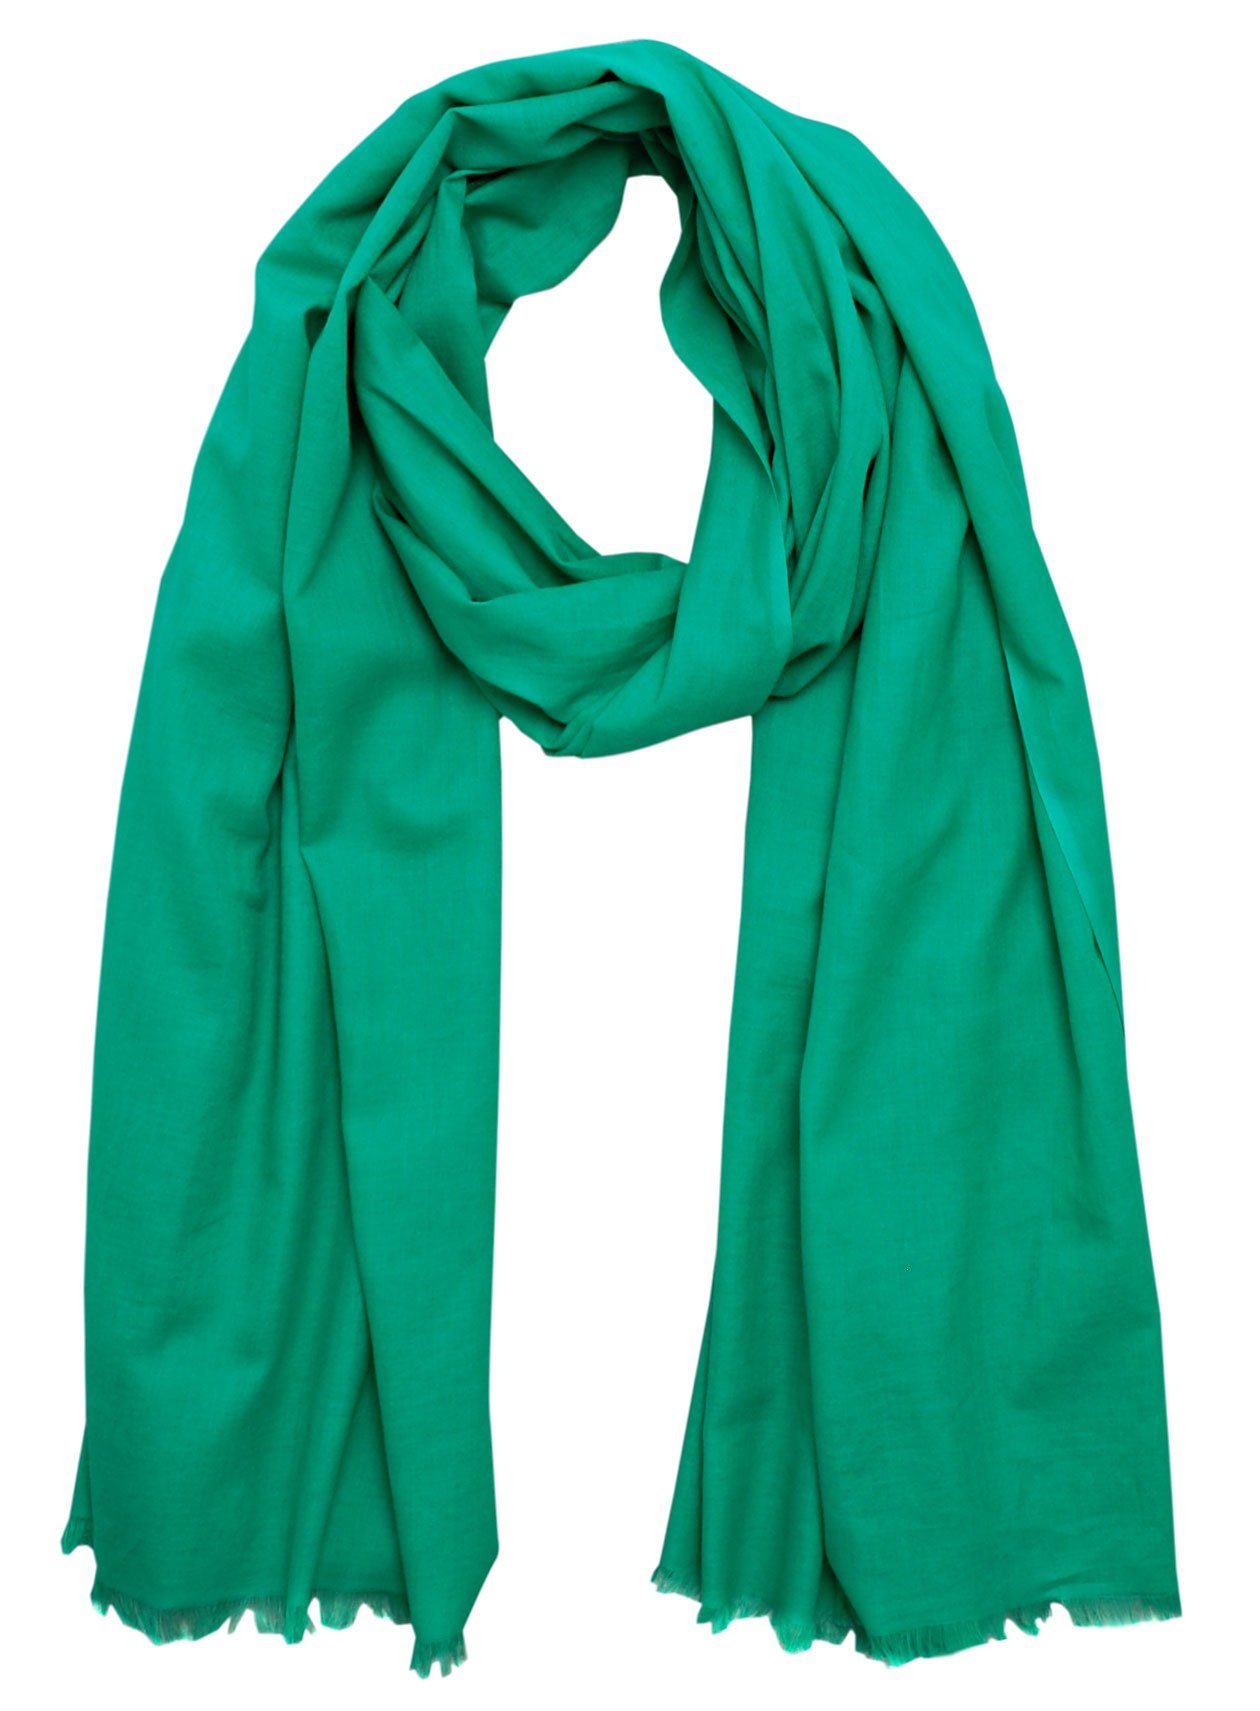 Bovari Schal Damen-Schal aus 100% gekämmter Bio-Baumwolle - handgewebt, - leicht, atmungsaktiv, dünn - Sommerschal in XL Größe 180x70 cm grün / emerald green